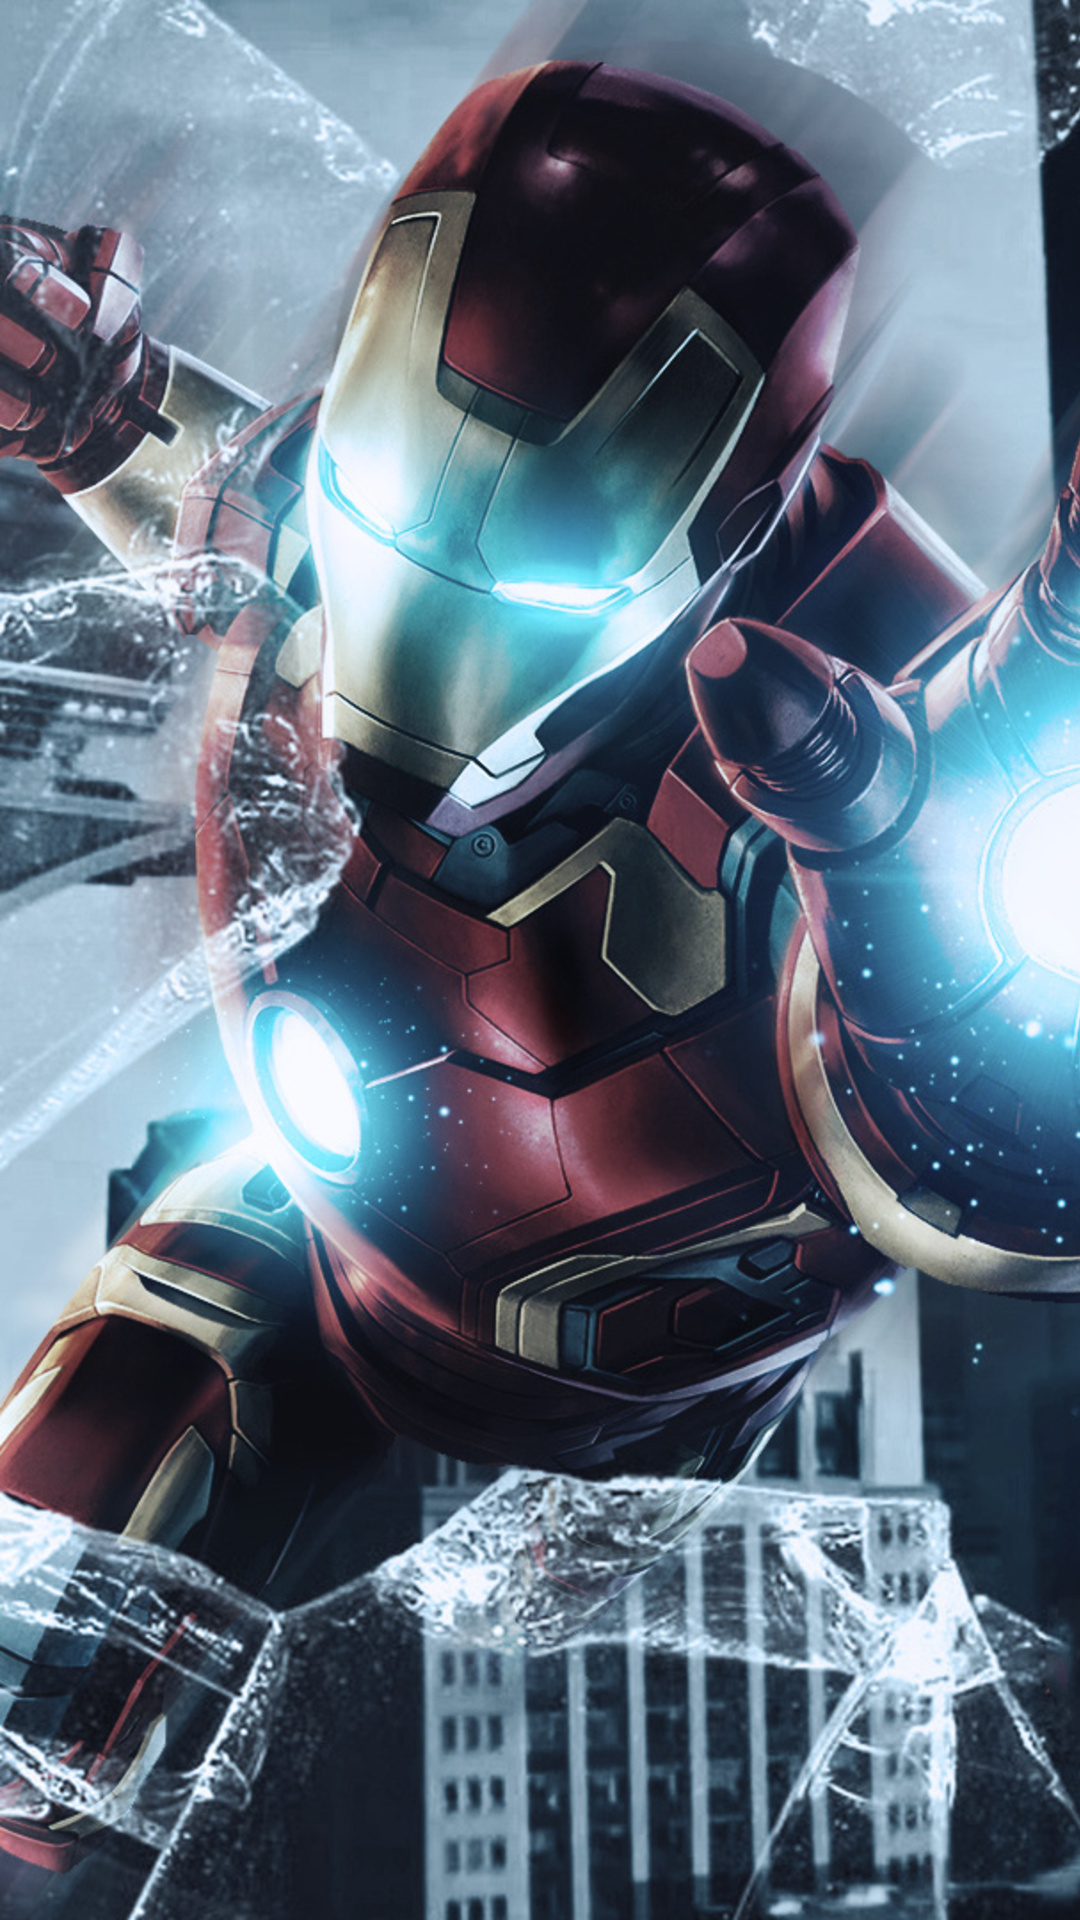 1080x1920 Iron Man Avengers Endgame Poster Iphone 7,6s,6 ...